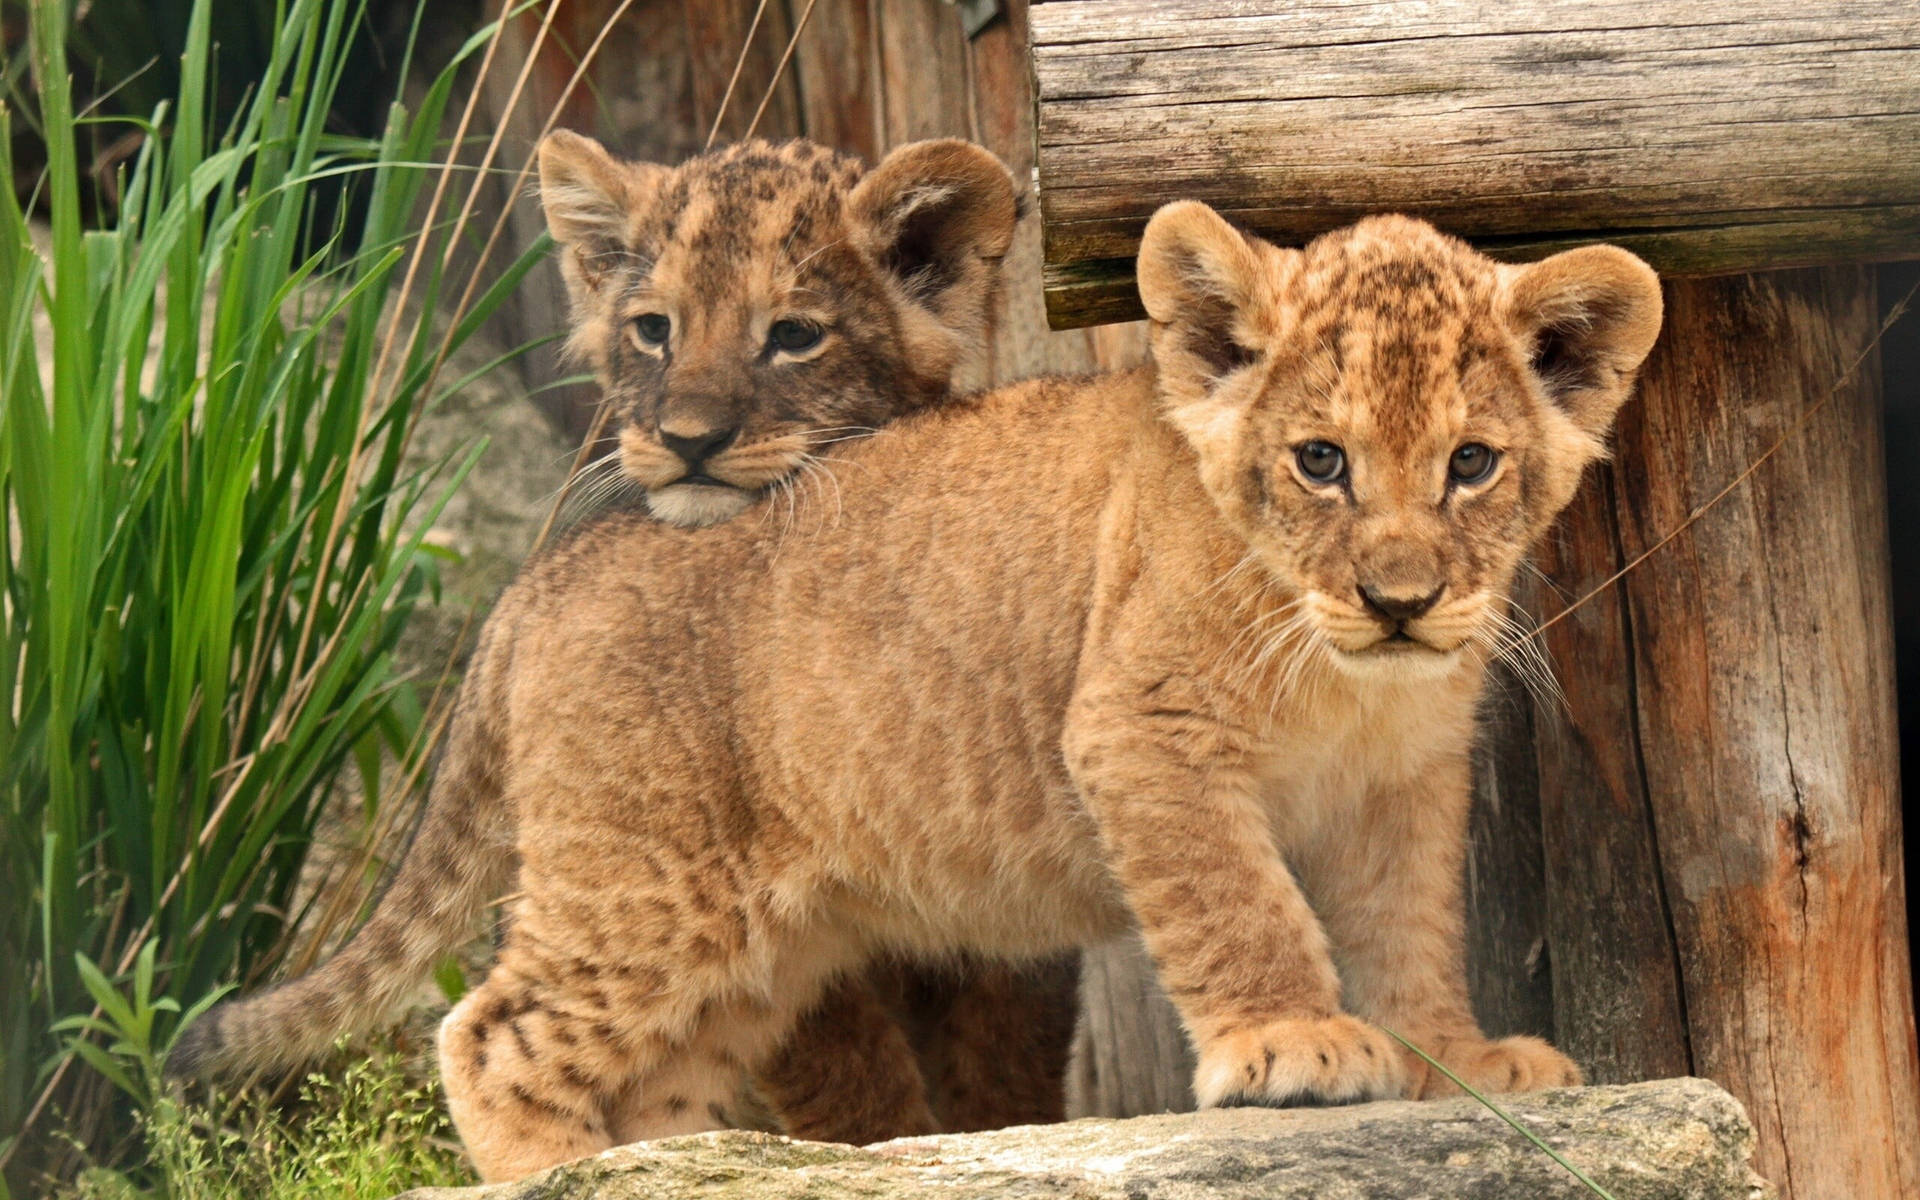 Two Adorable Lion Cubs